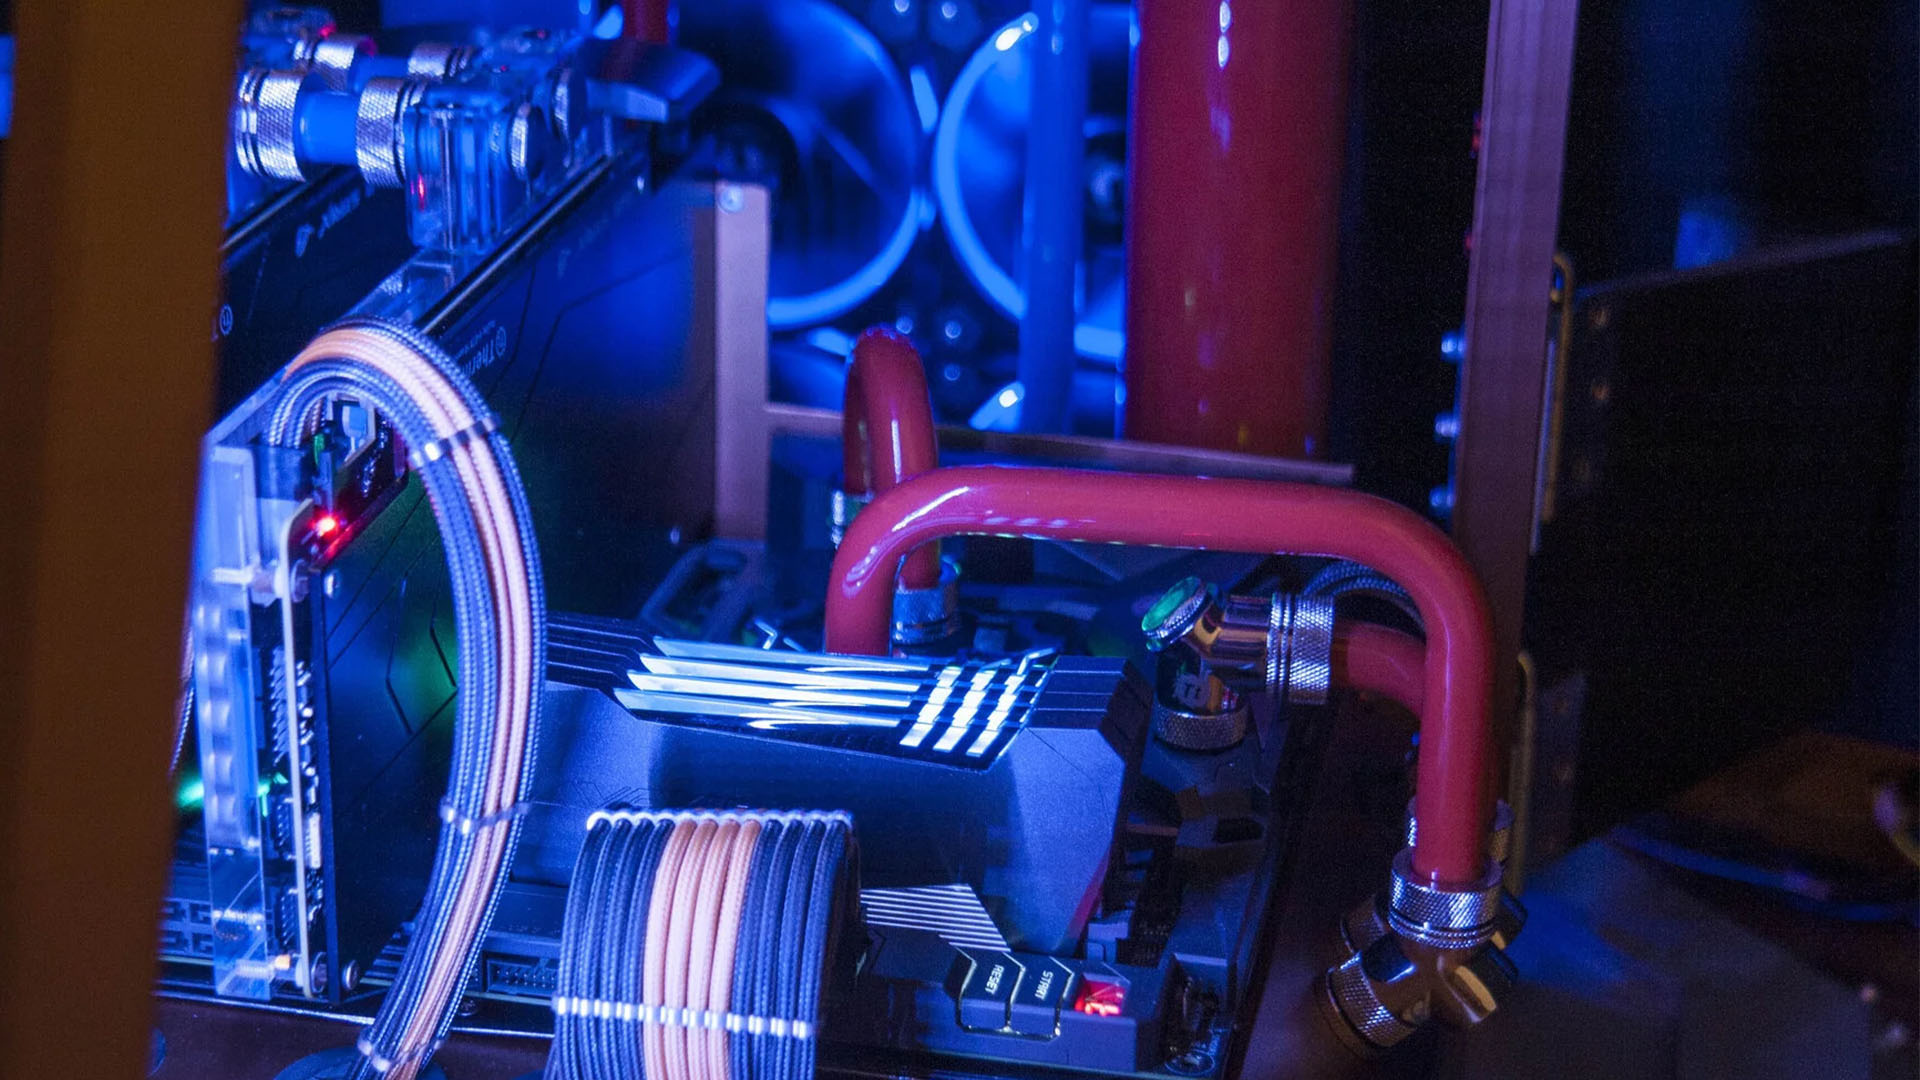 Doctor Who Dalek gaming PC build; water cooling loop inside